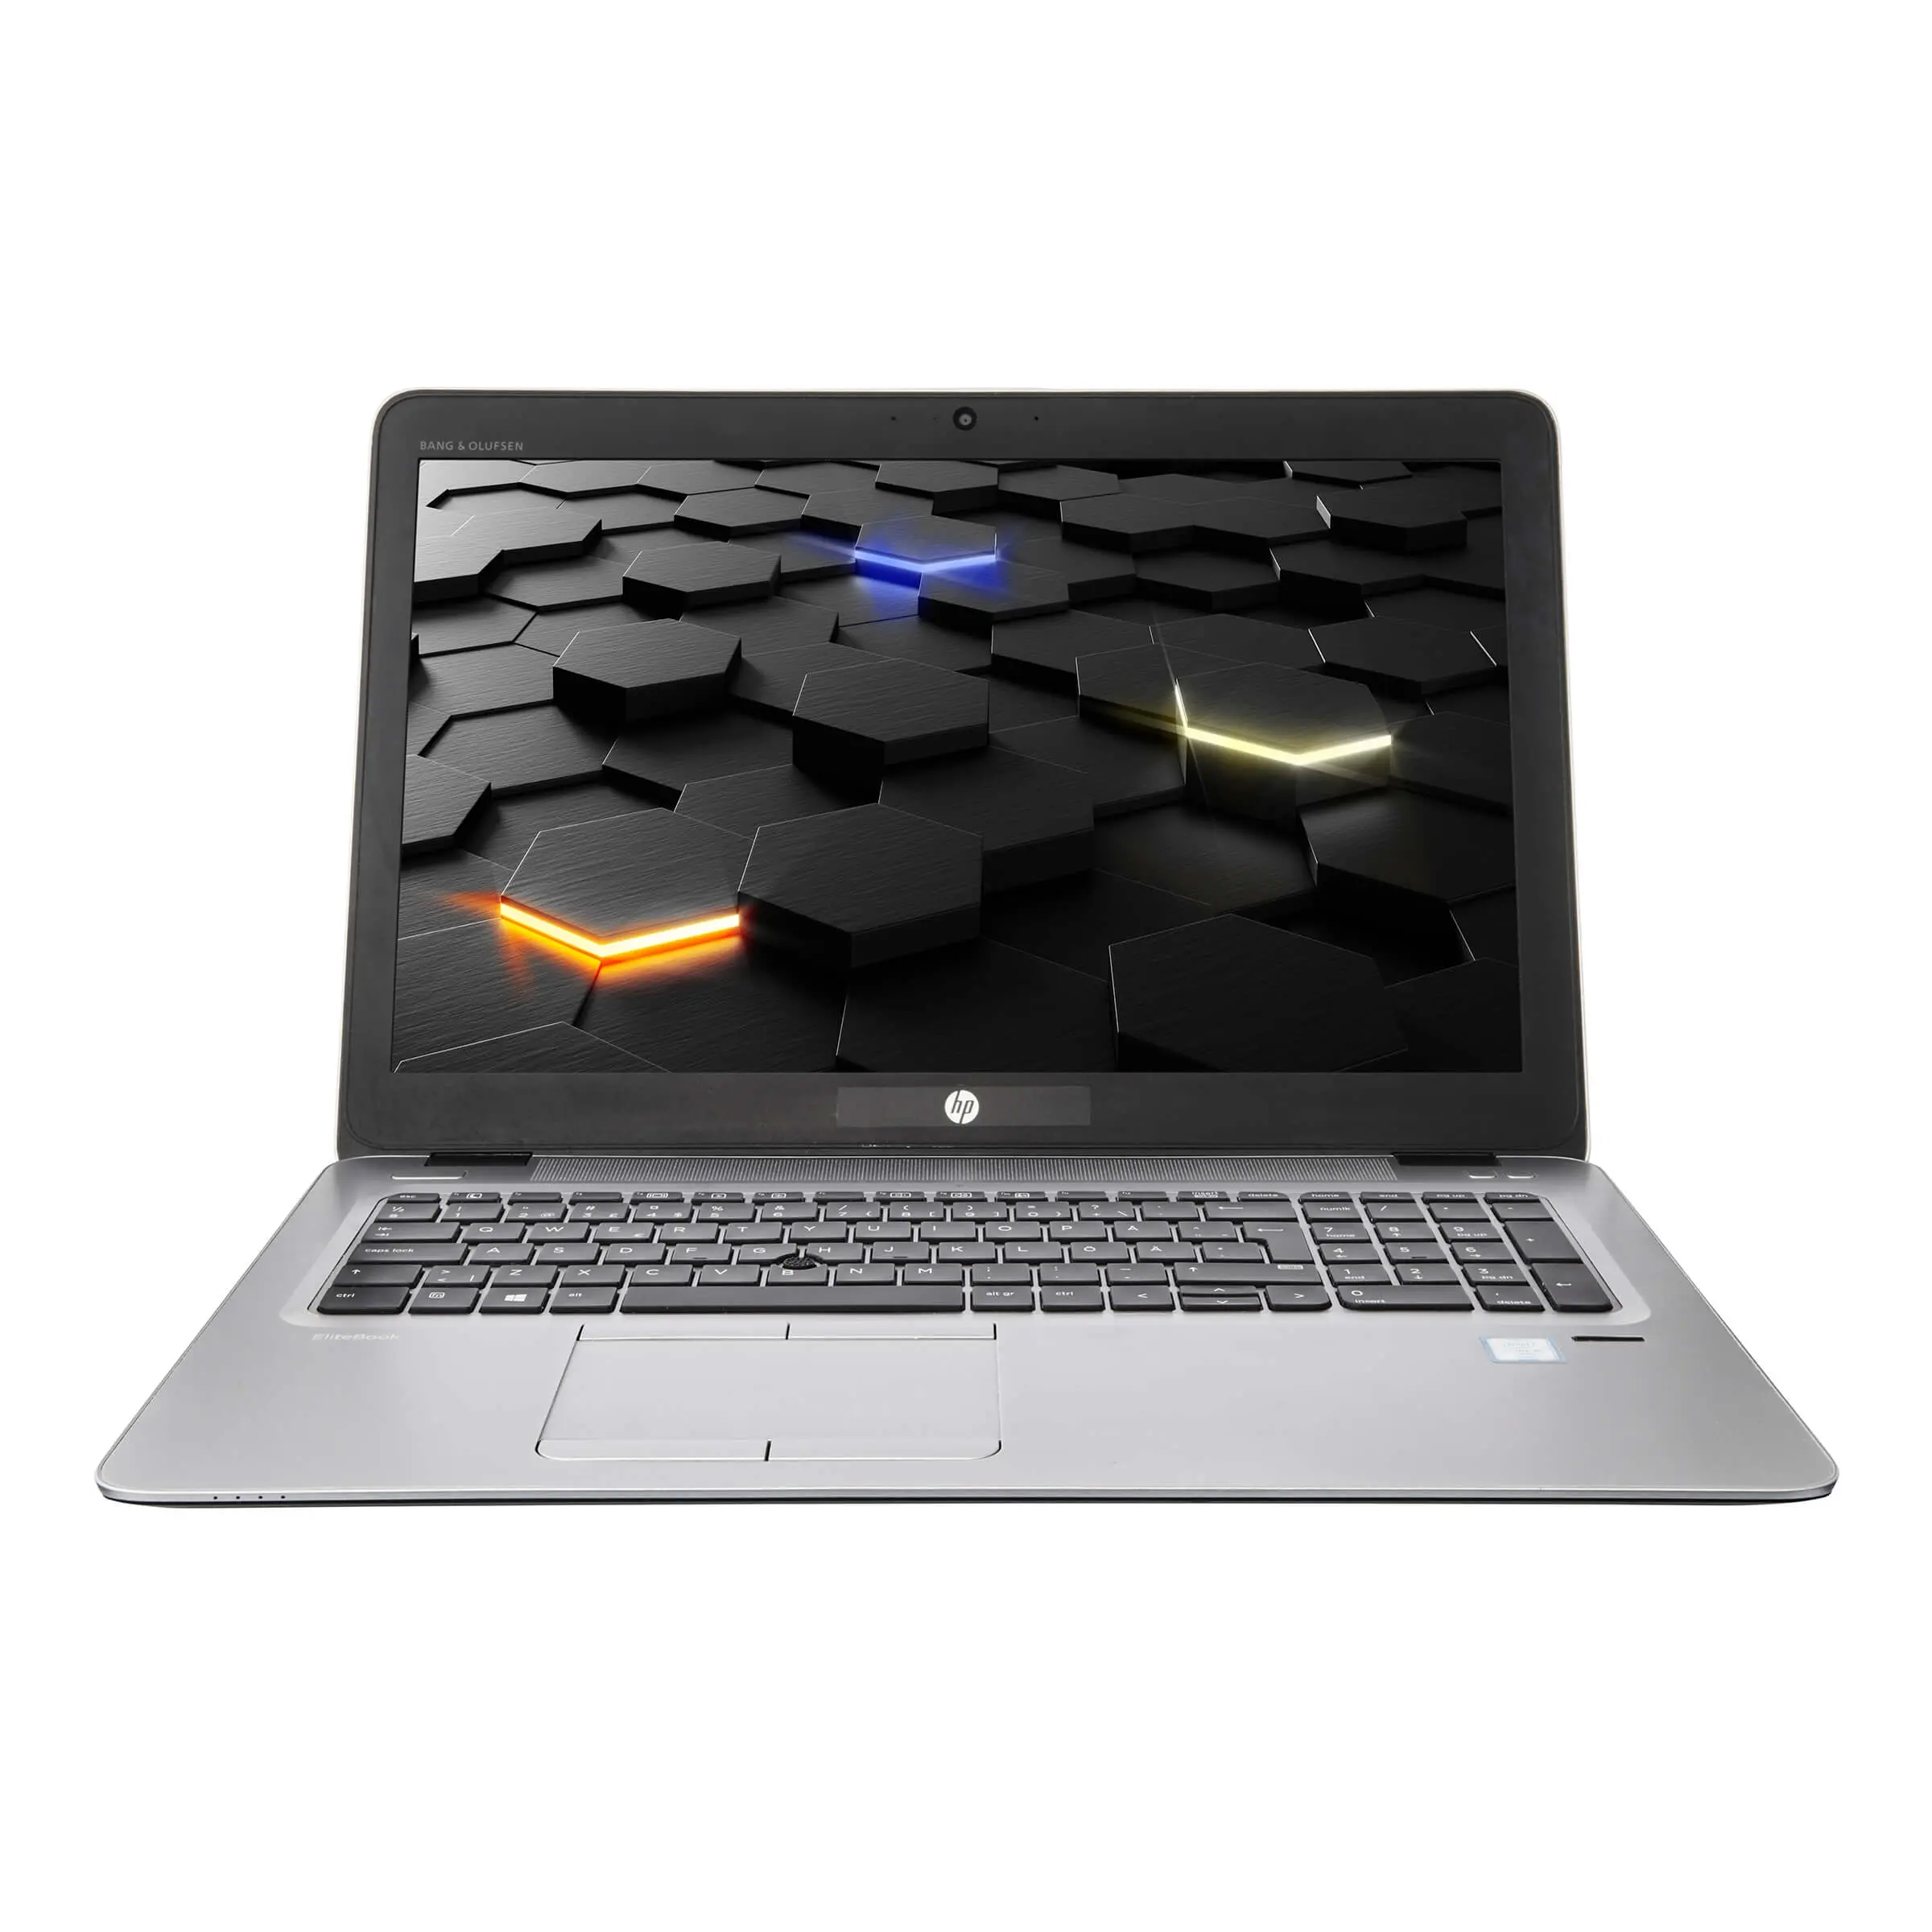 HP EliteBook 850 G3, i5, 15.6 Zoll Full-HD IPS, 16GB, 250GB SSD + 500GB HDD, Webcam, Windows 10 Pro